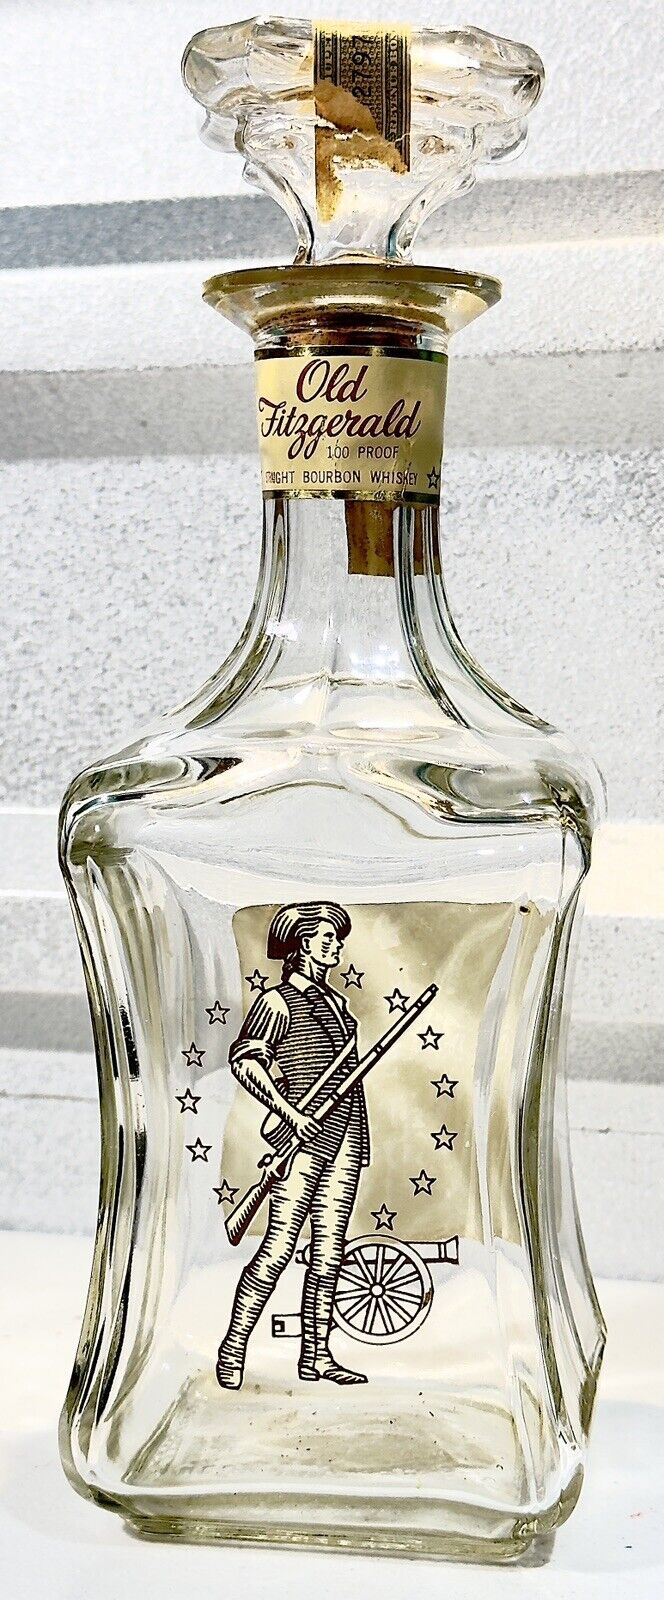 VINTAGE Old Fitzgerald Collection Liquor Bottle DecanterPatriotic Patriot 1960’s